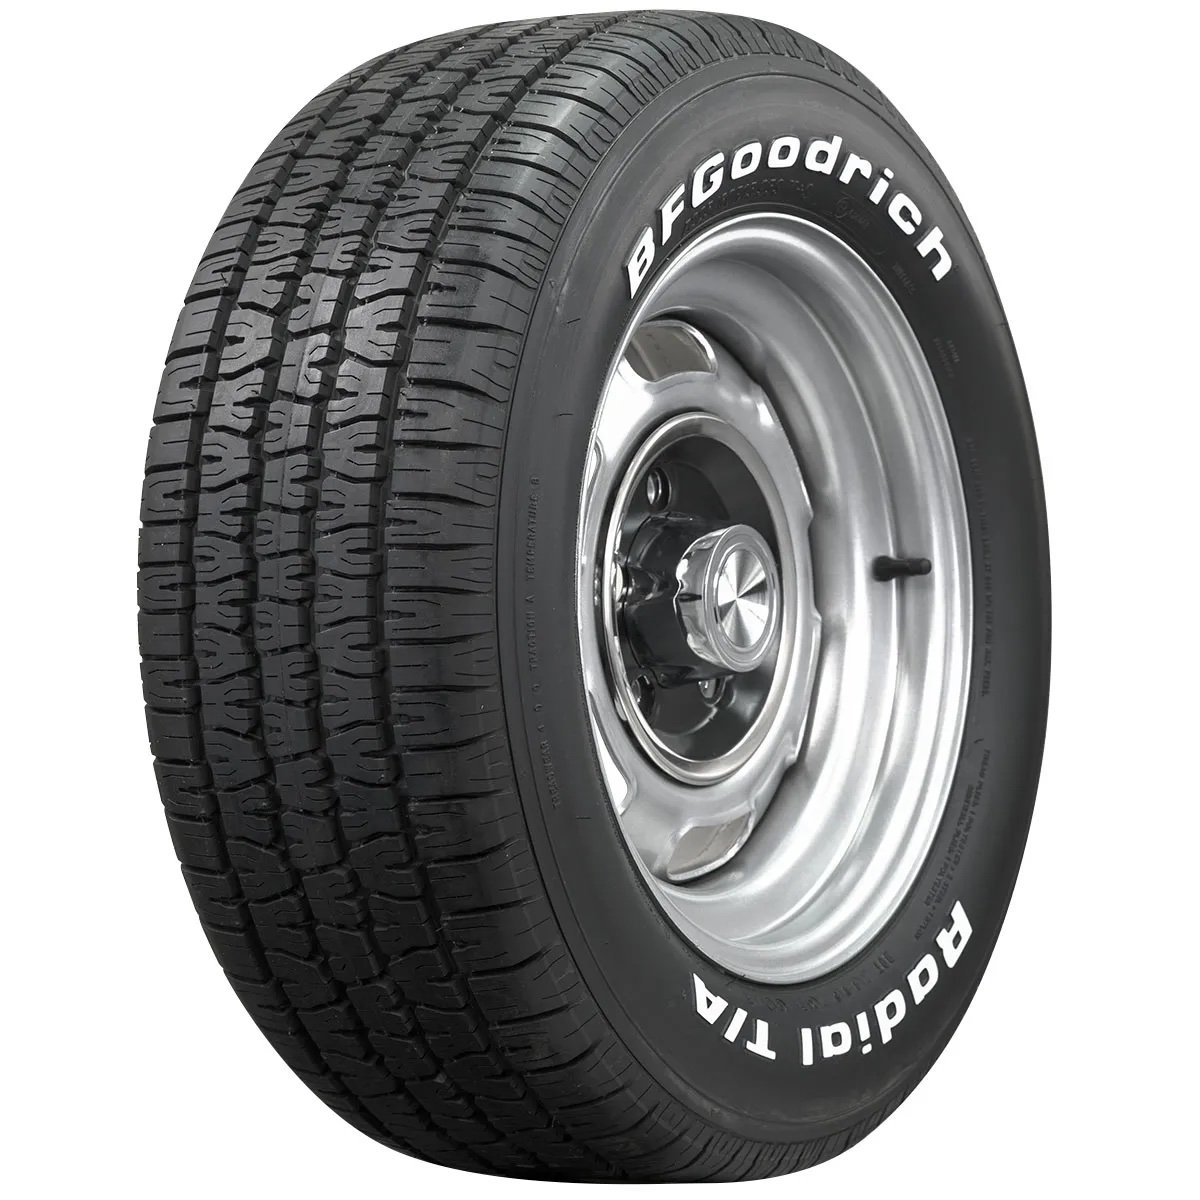 BFG T/A Radial Tire P205/60R13